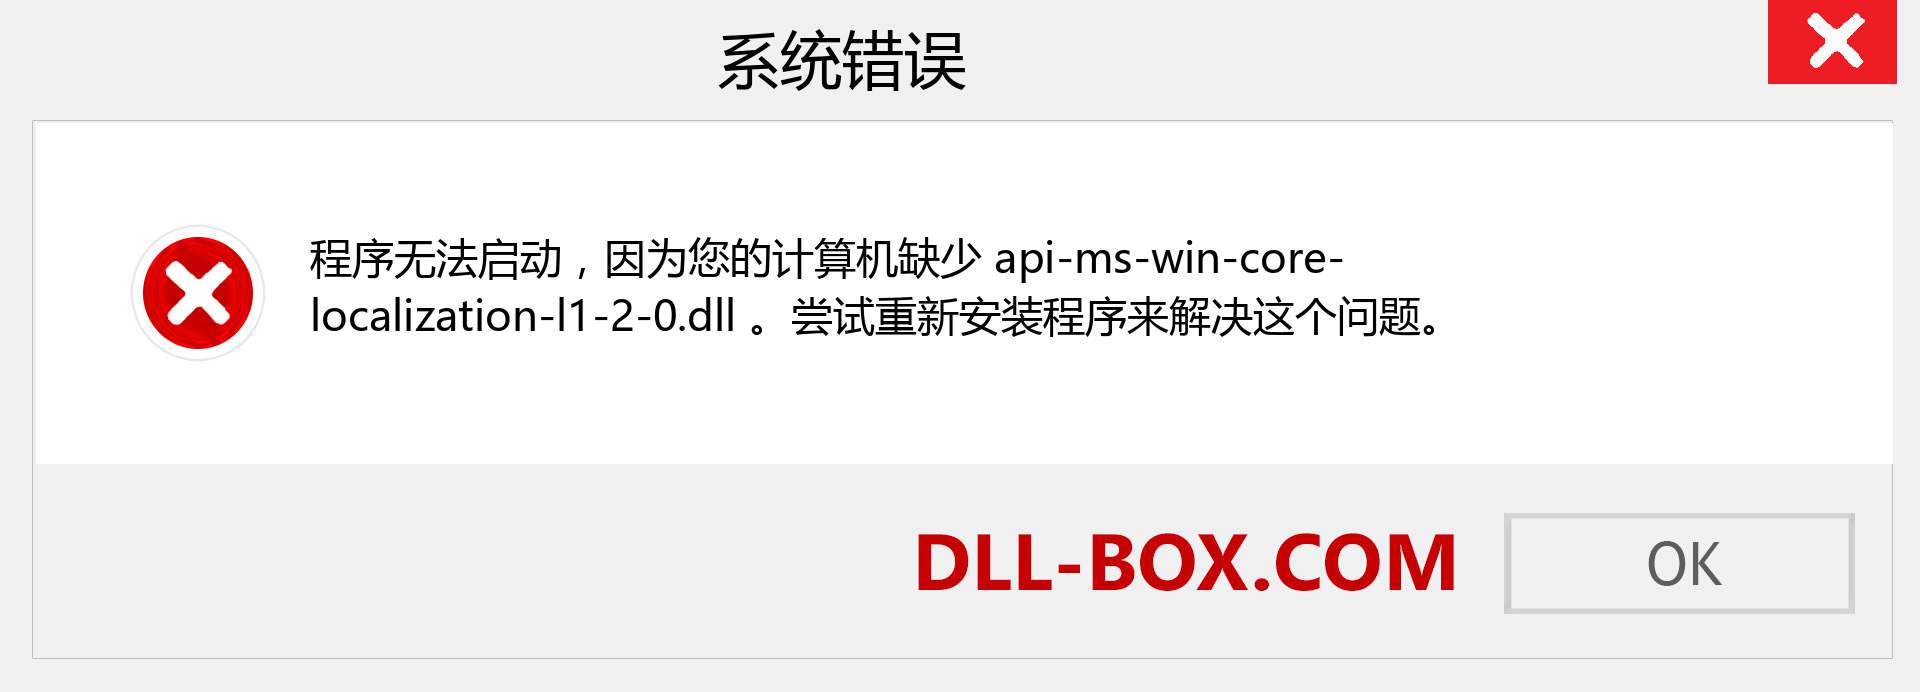 api-ms-win-core-localization-l1-2-0.dll 文件丢失？。 适用于 Windows 7、8、10 的下载 - 修复 Windows、照片、图像上的 api-ms-win-core-localization-l1-2-0 dll 丢失错误